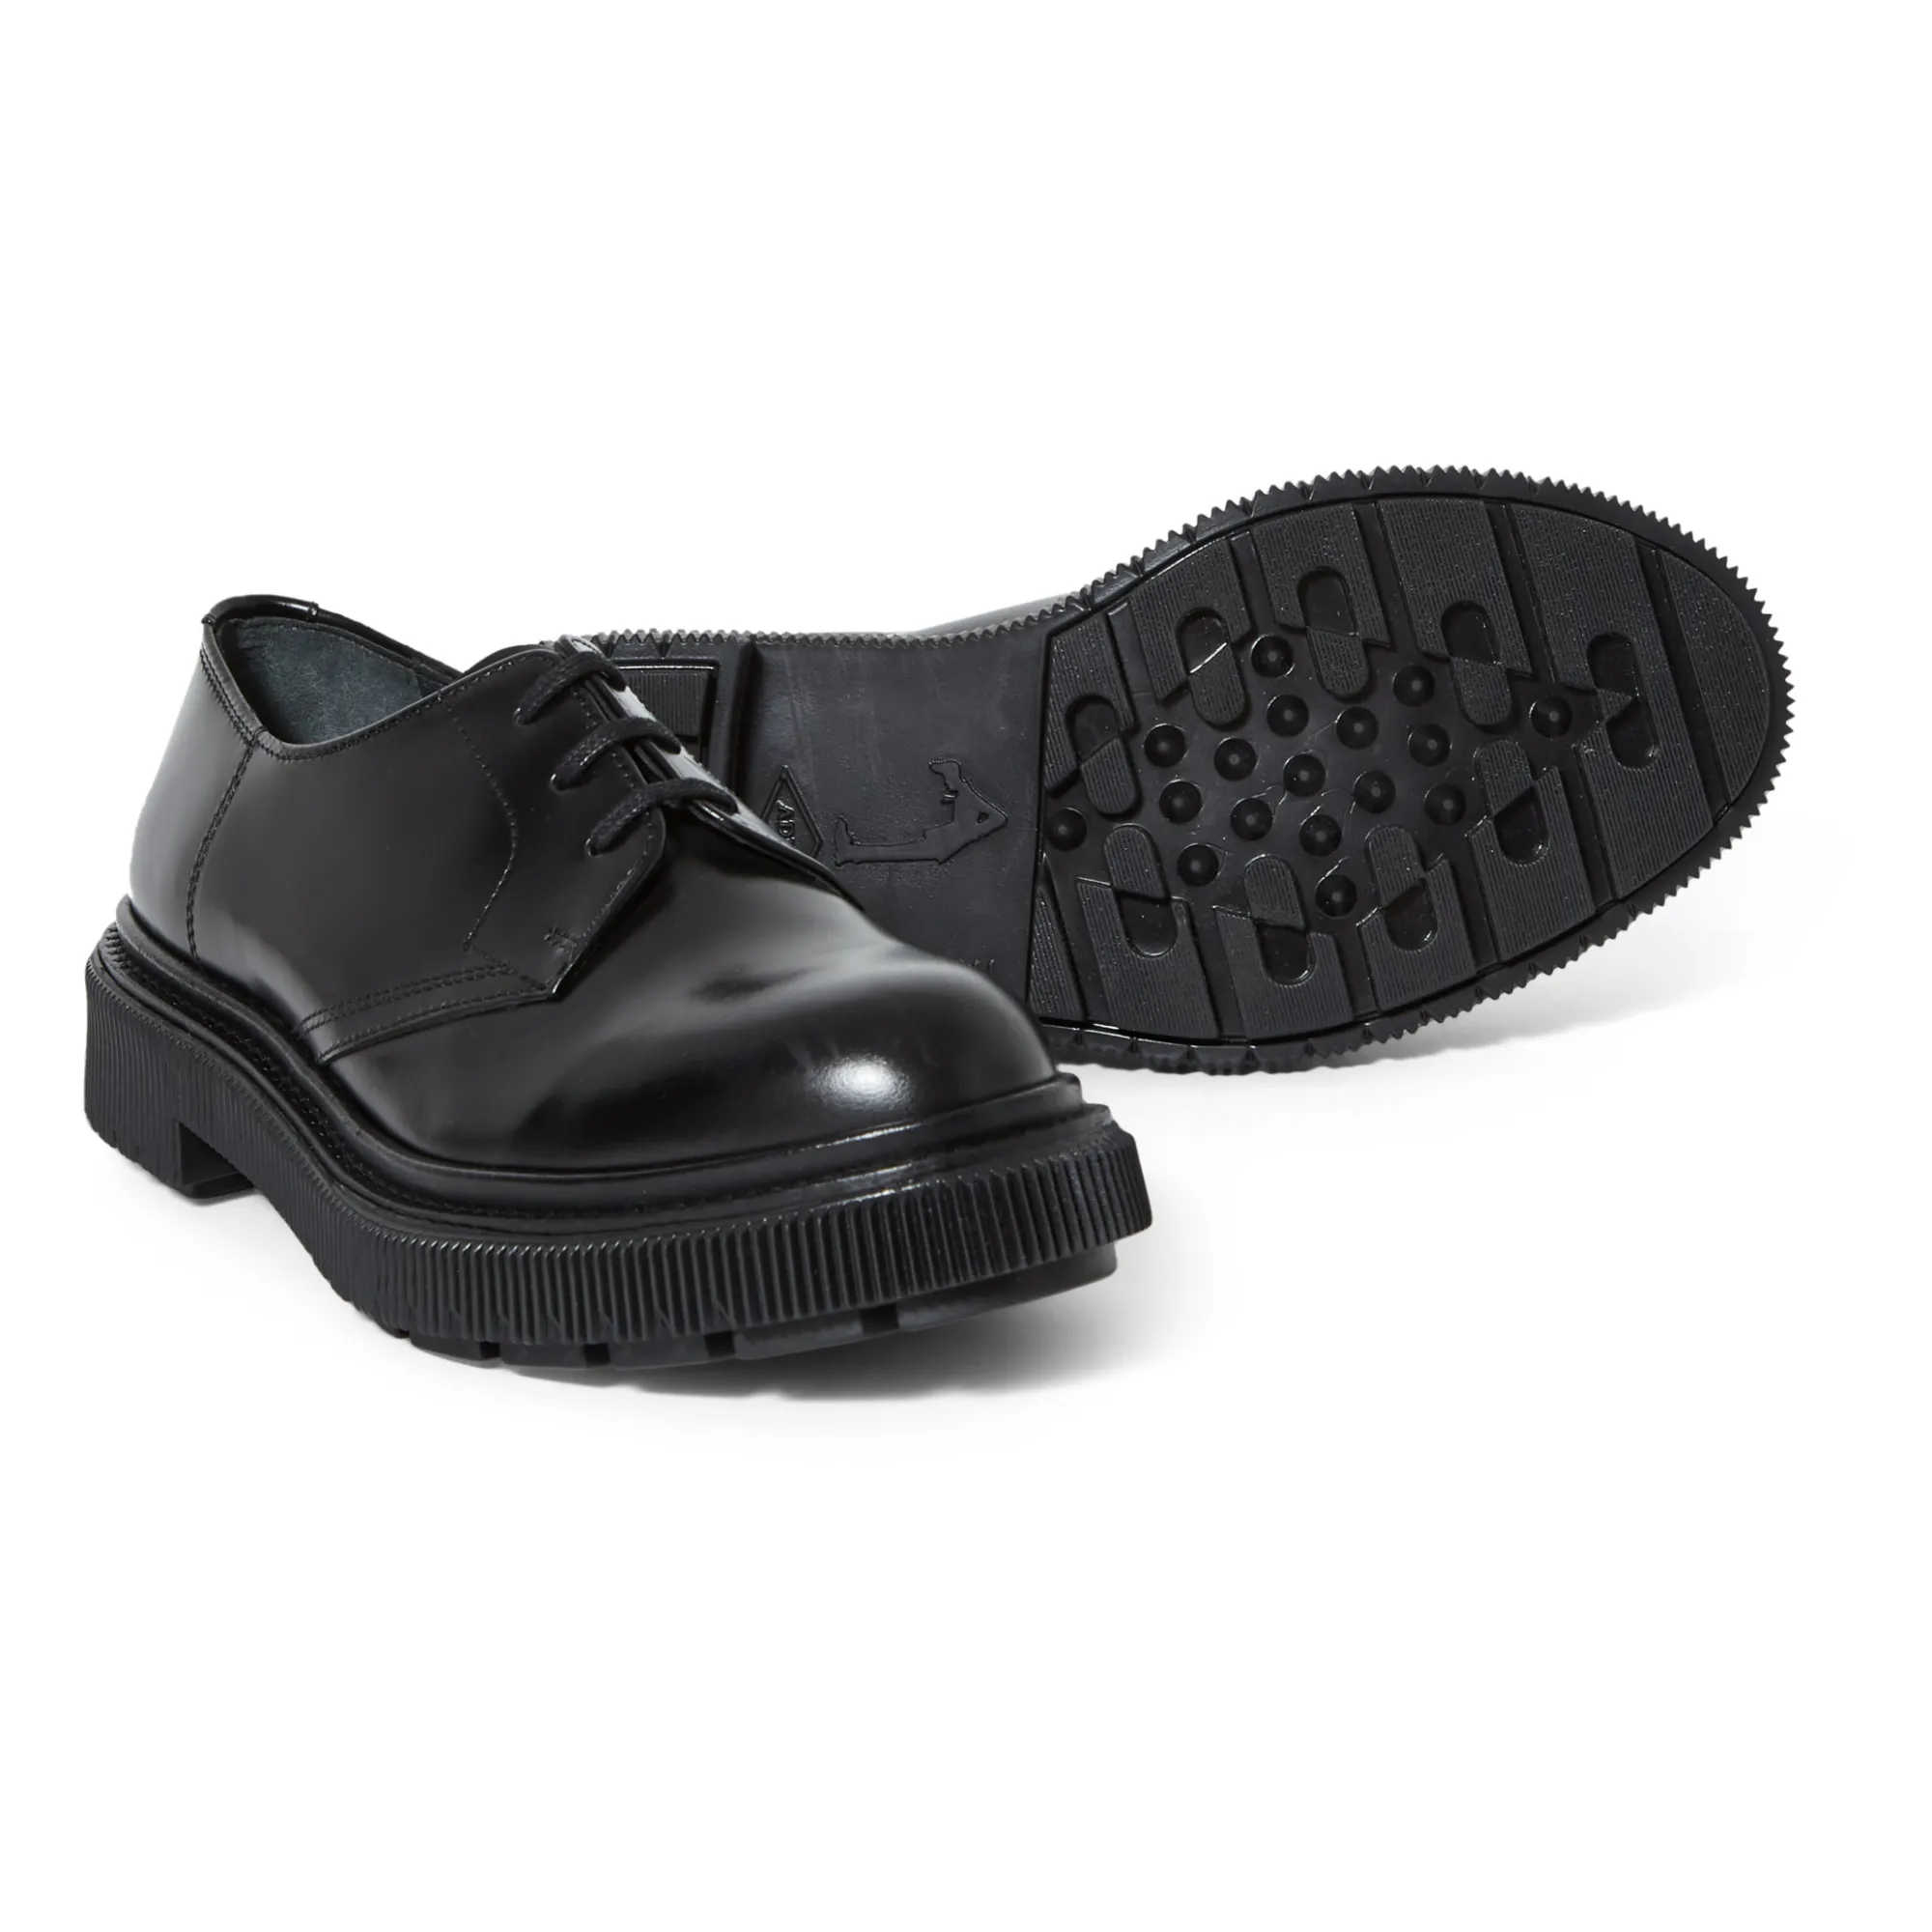 Adieu - Type 132 Derby Shoes - Black | Smallable